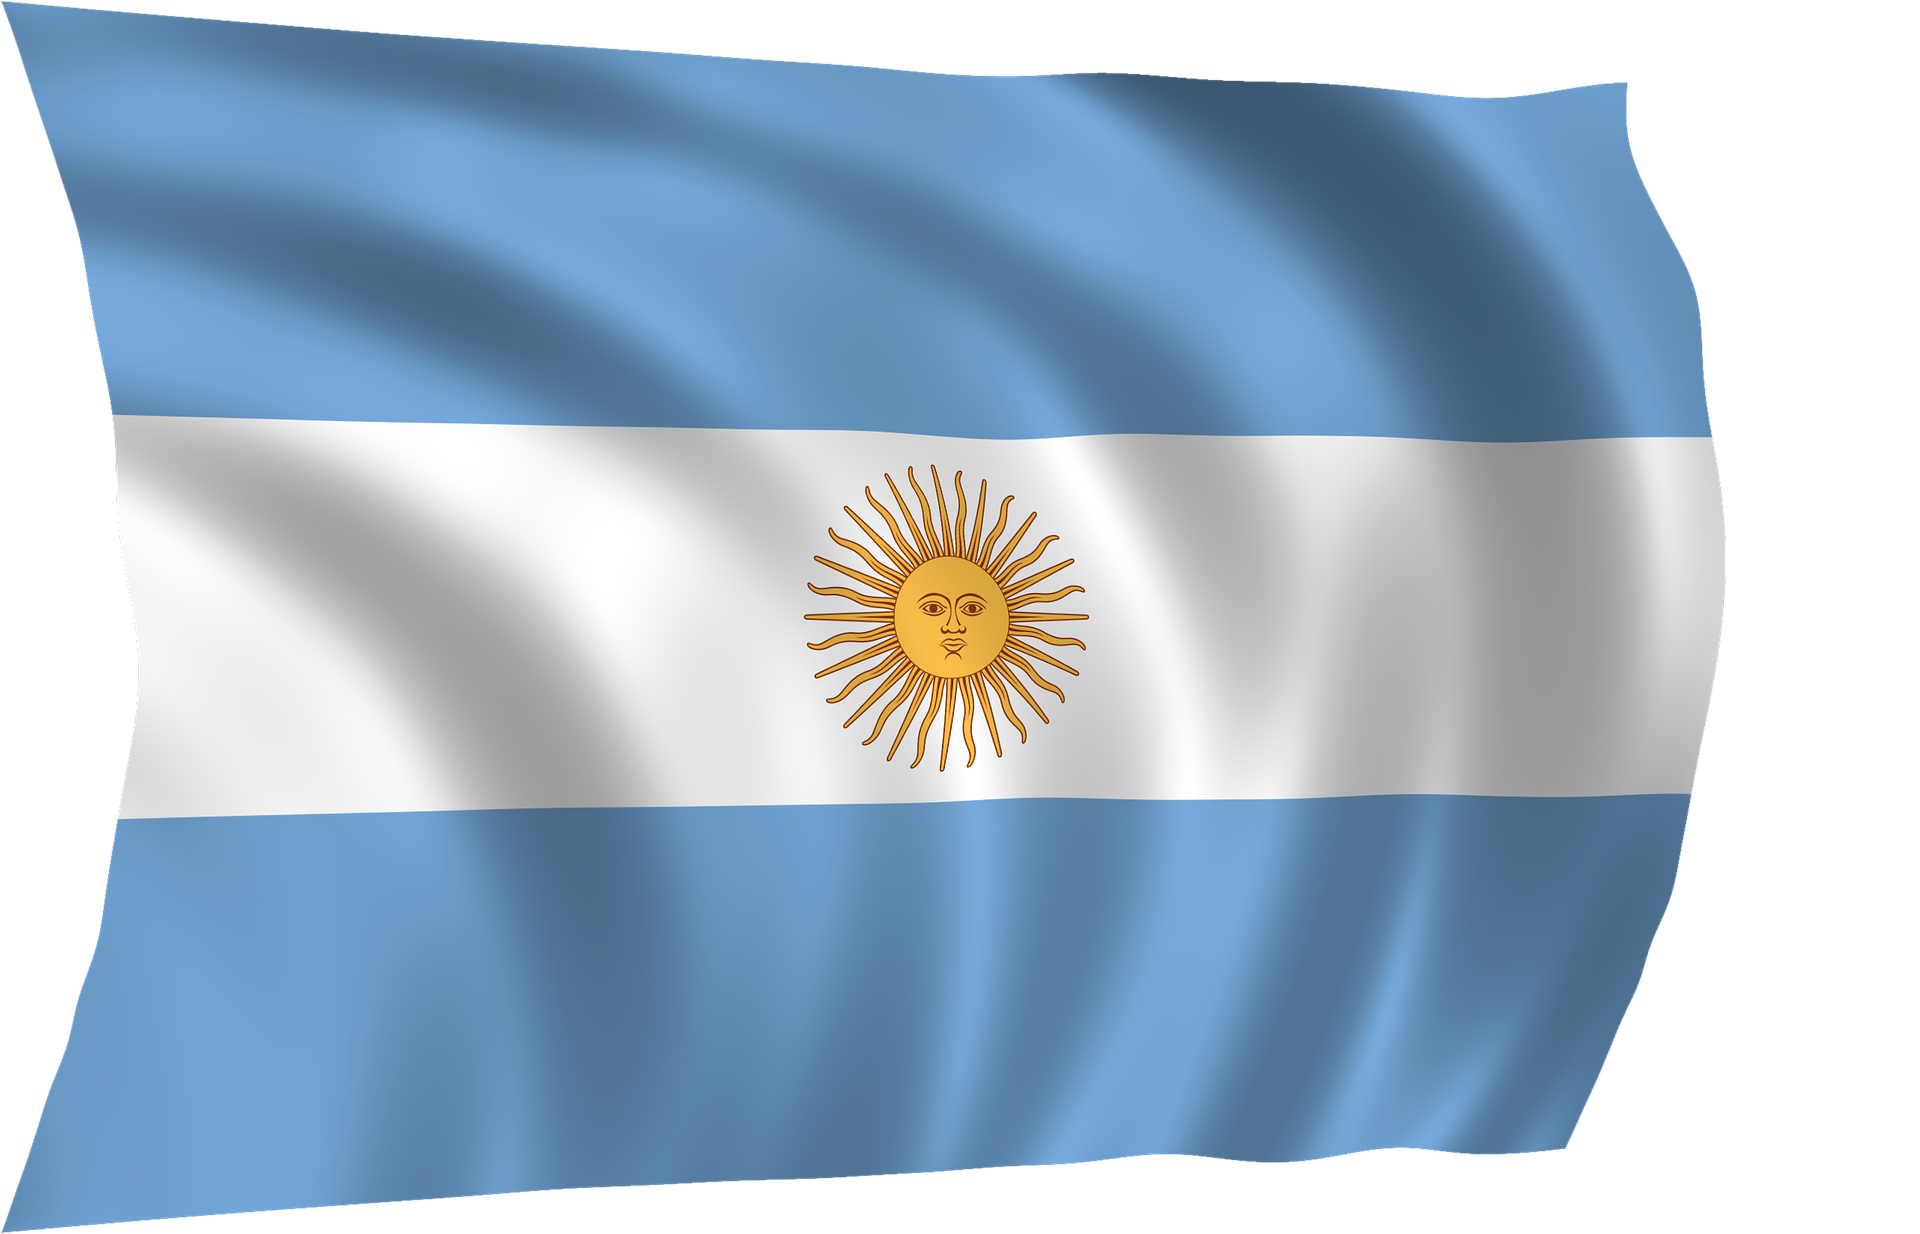 Argentina To Shut Down Crypto Activities To Attain $45 Billion Loan, Says IMF